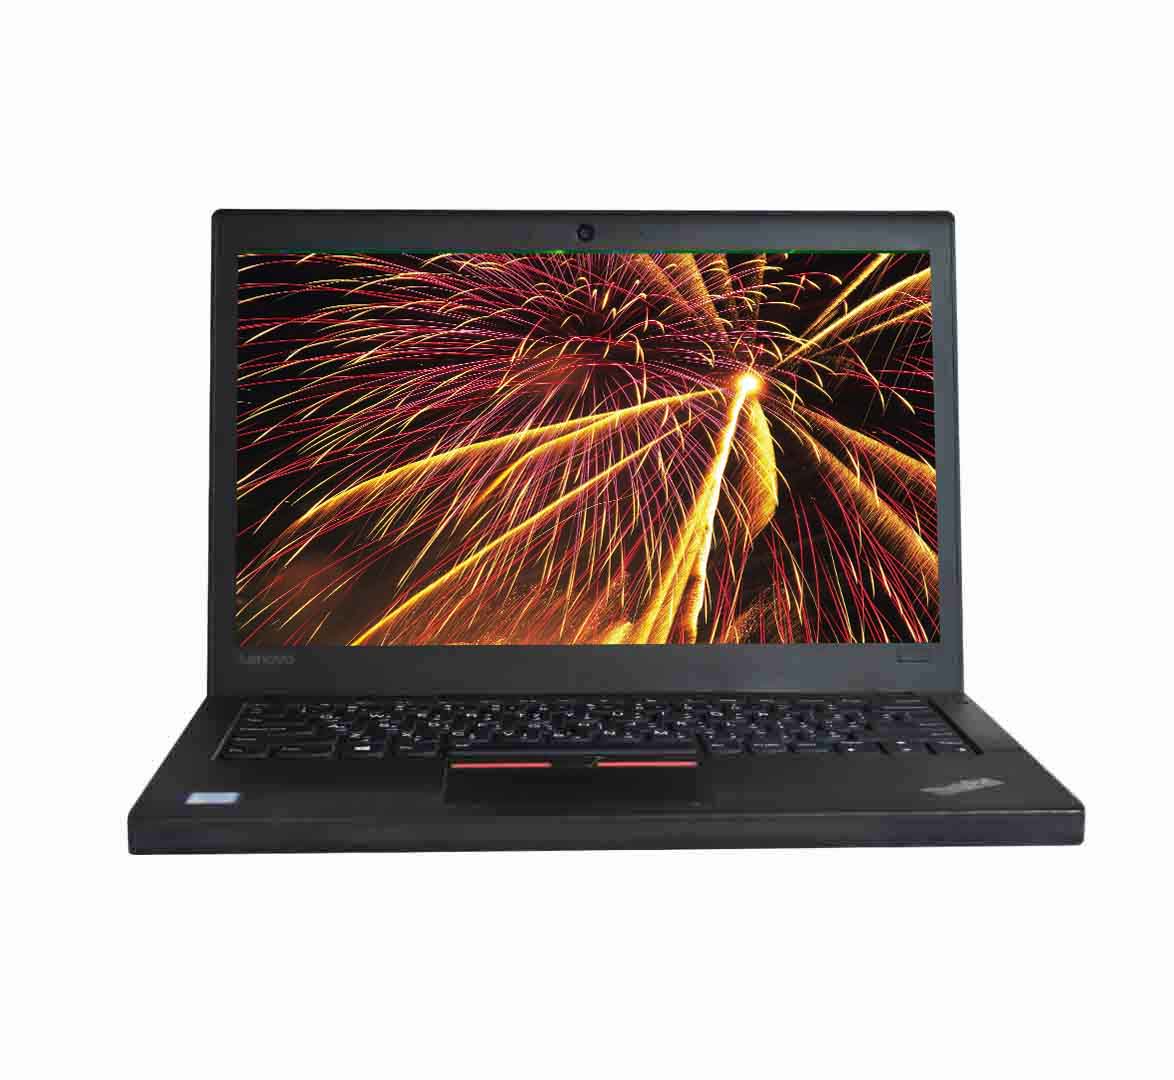 Lenovo ThinkPad X260 Business Laptop, Intel Core i7-6th Generation CPU, 8GB RAM, 256GB SSD, 12 inch Display, Windows 10 Pro